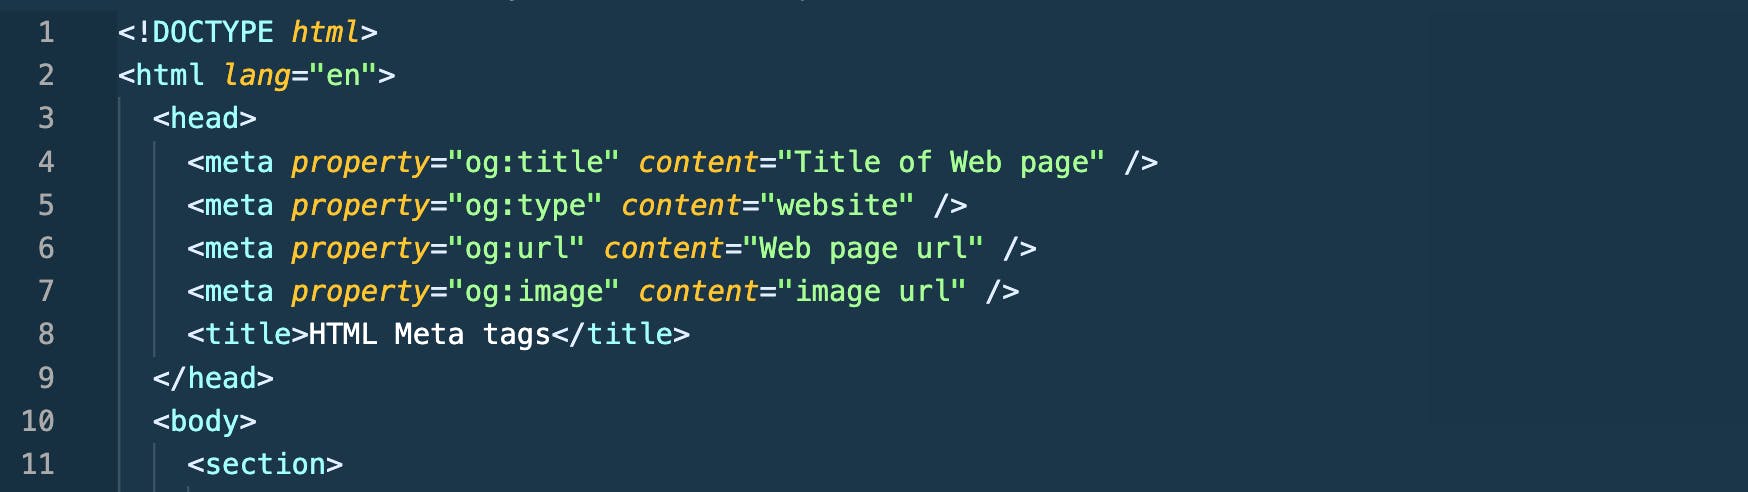 HTML Meta tags